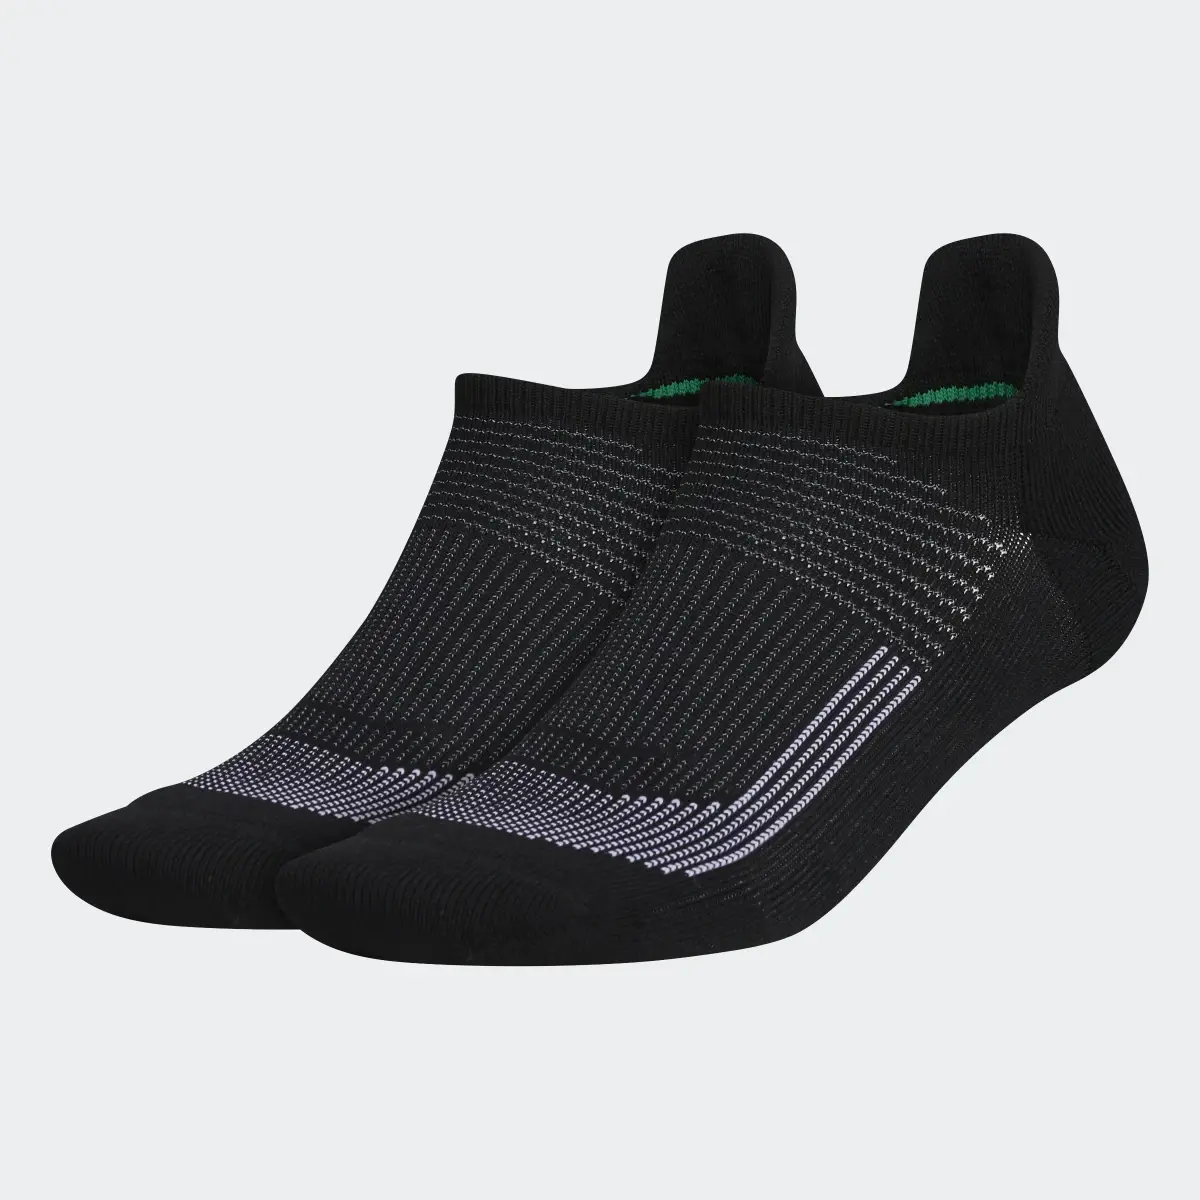 Adidas Superlite Ultraboost Tabbed No-Show Socks 2 Pairs. 2